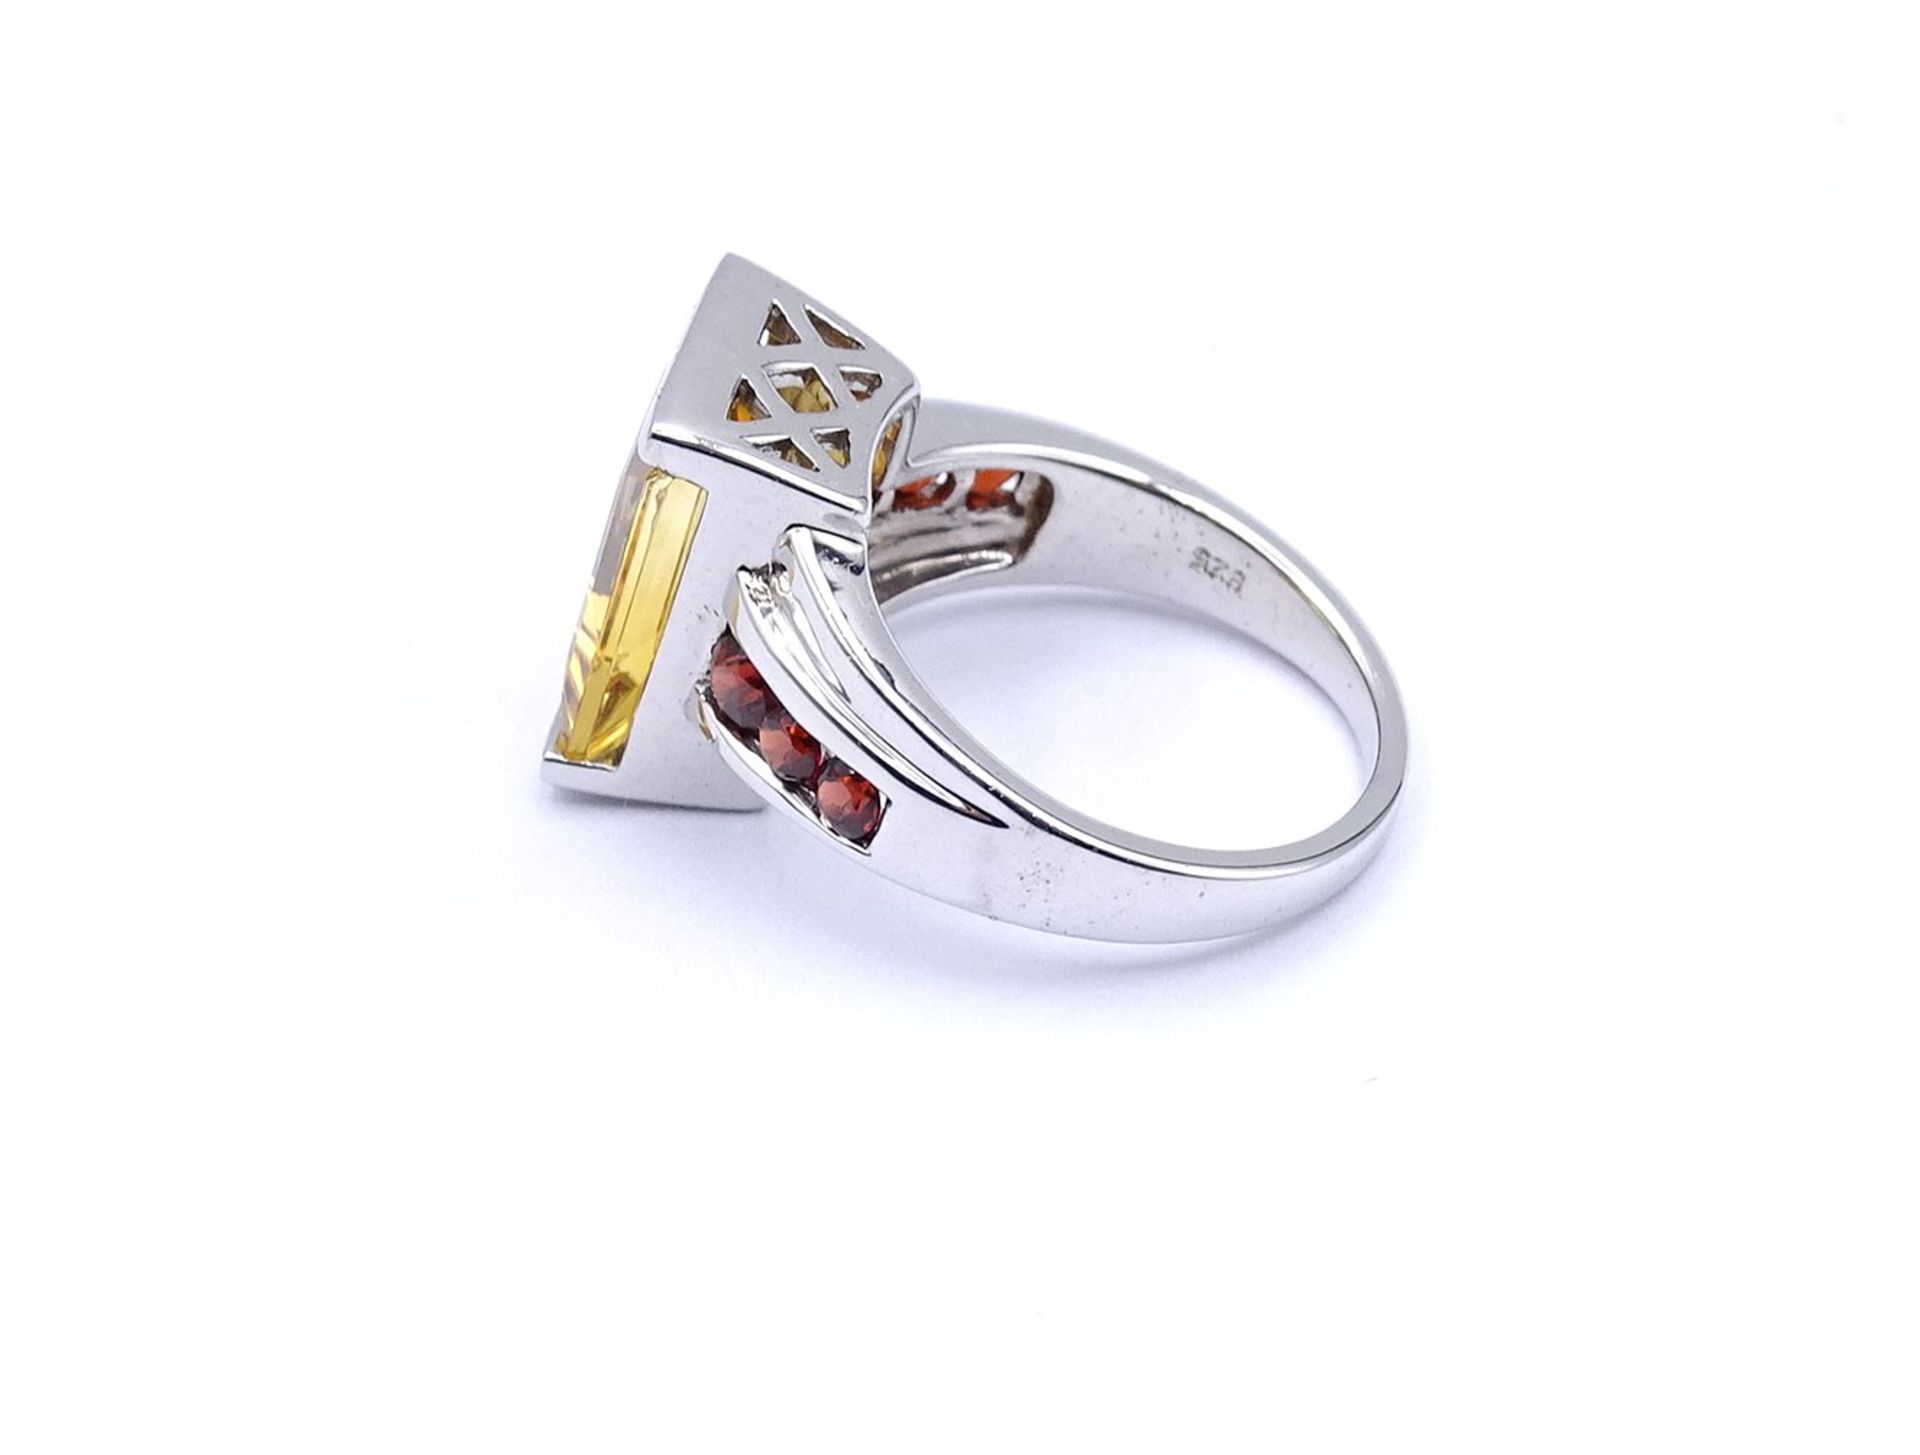 Edelstein Ring, Silber 925/000, 6,5g., RG 55 - Image 3 of 3